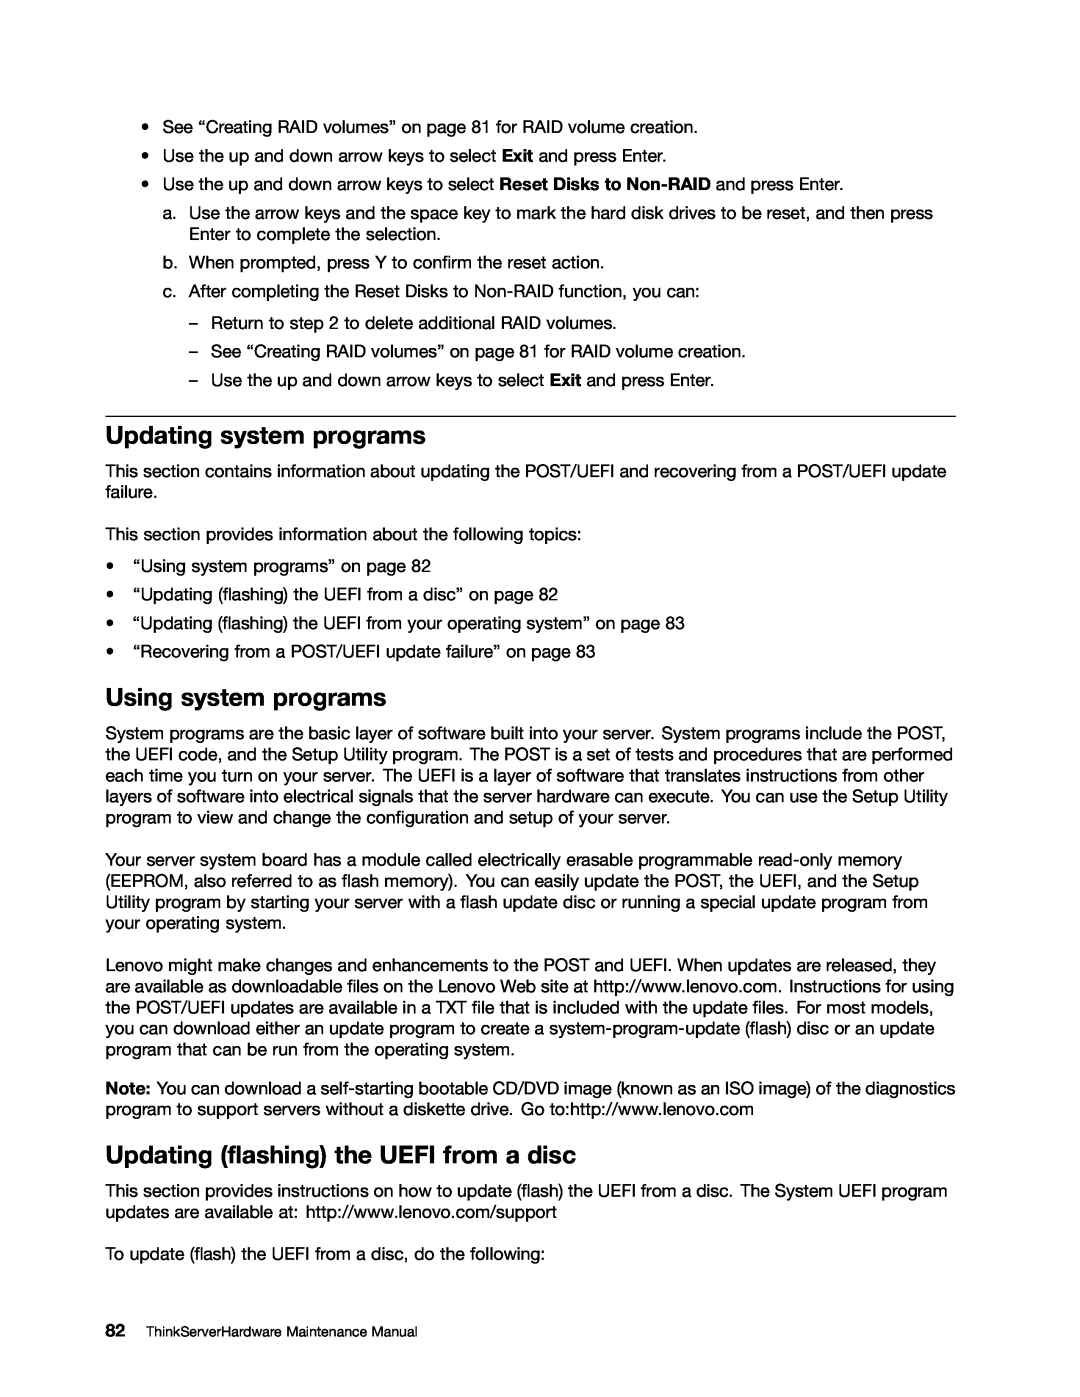 Lenovo 992, 981, 1008, 1010 manual Updating system programs, Using system programs, Updating flashing the UEFI from a disc 